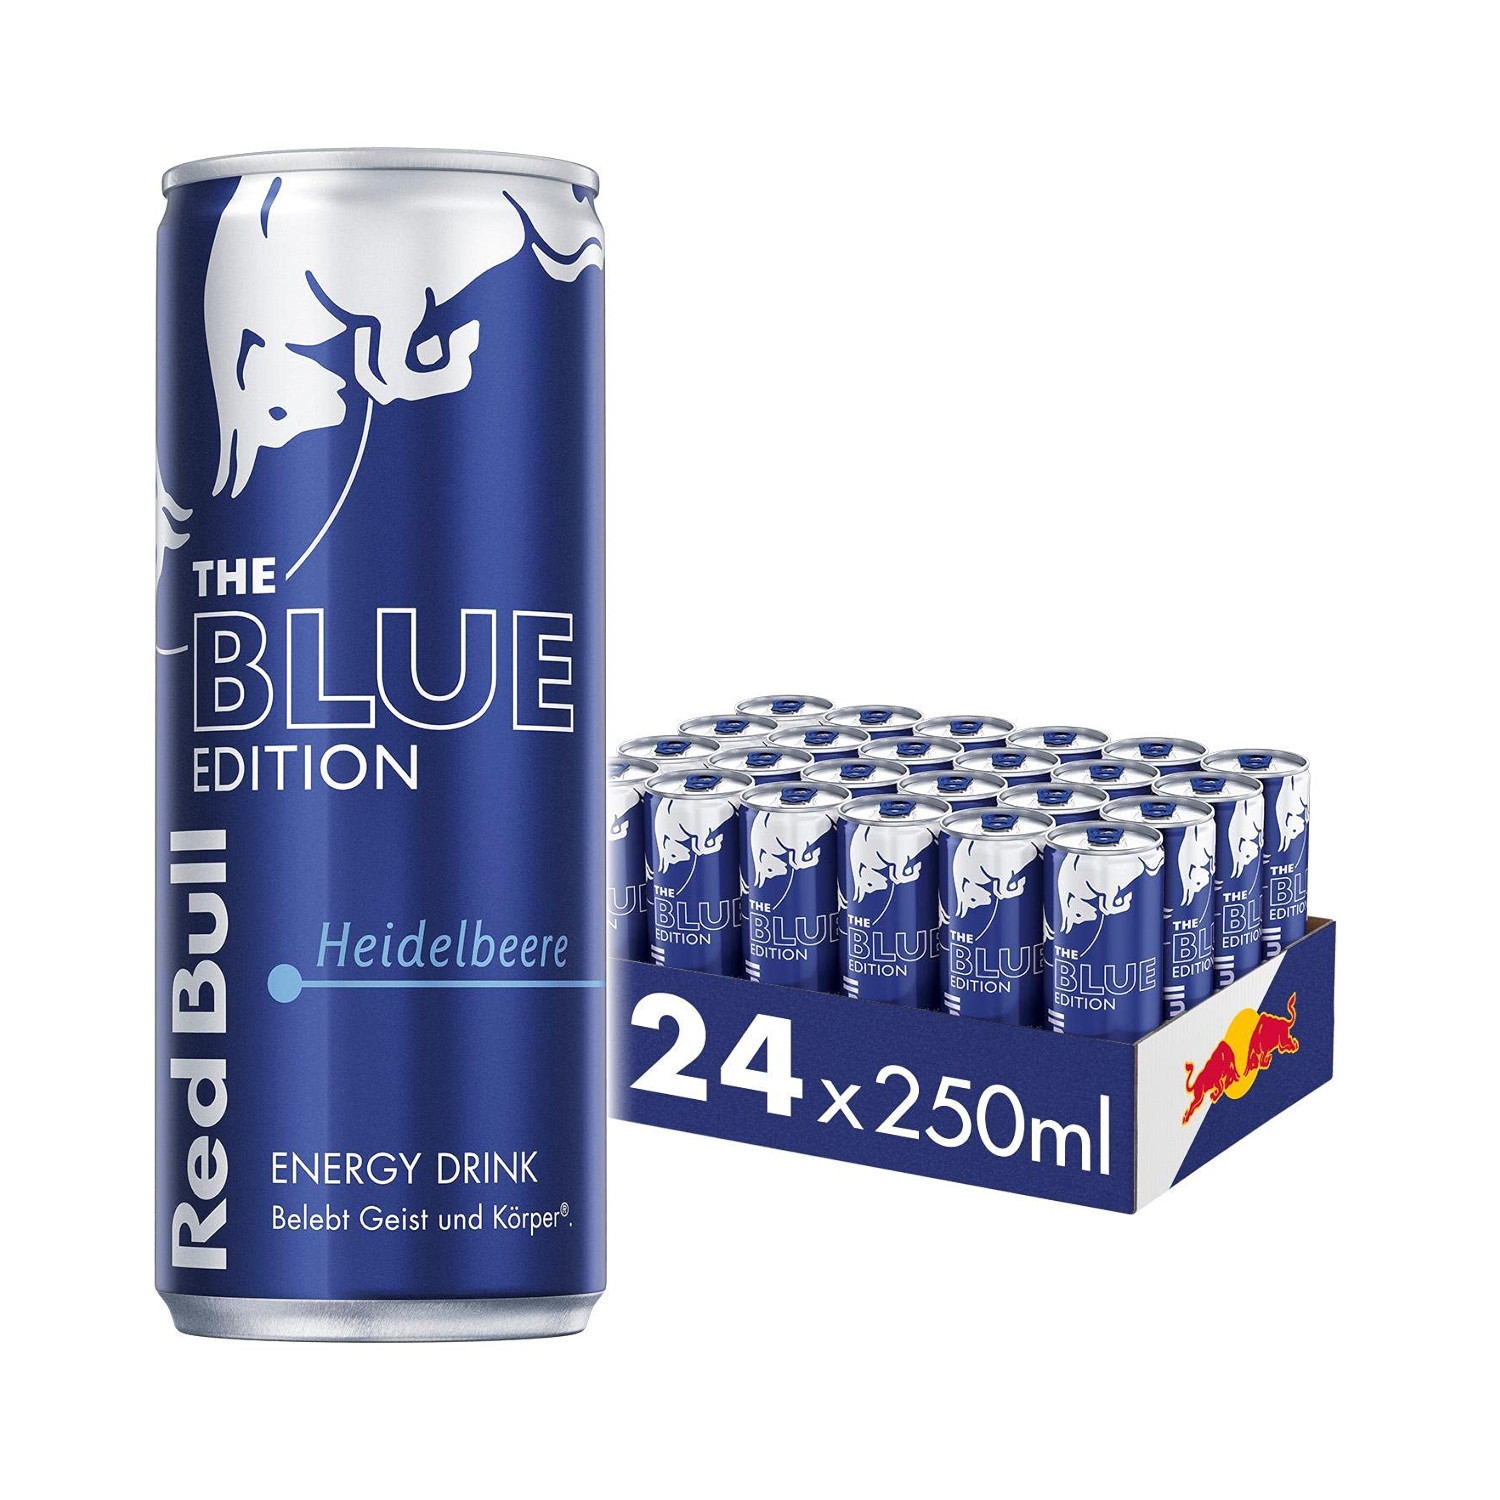 Red Bull Energy Drink Blue Edition Heidelbeere (24 x 250 ml)